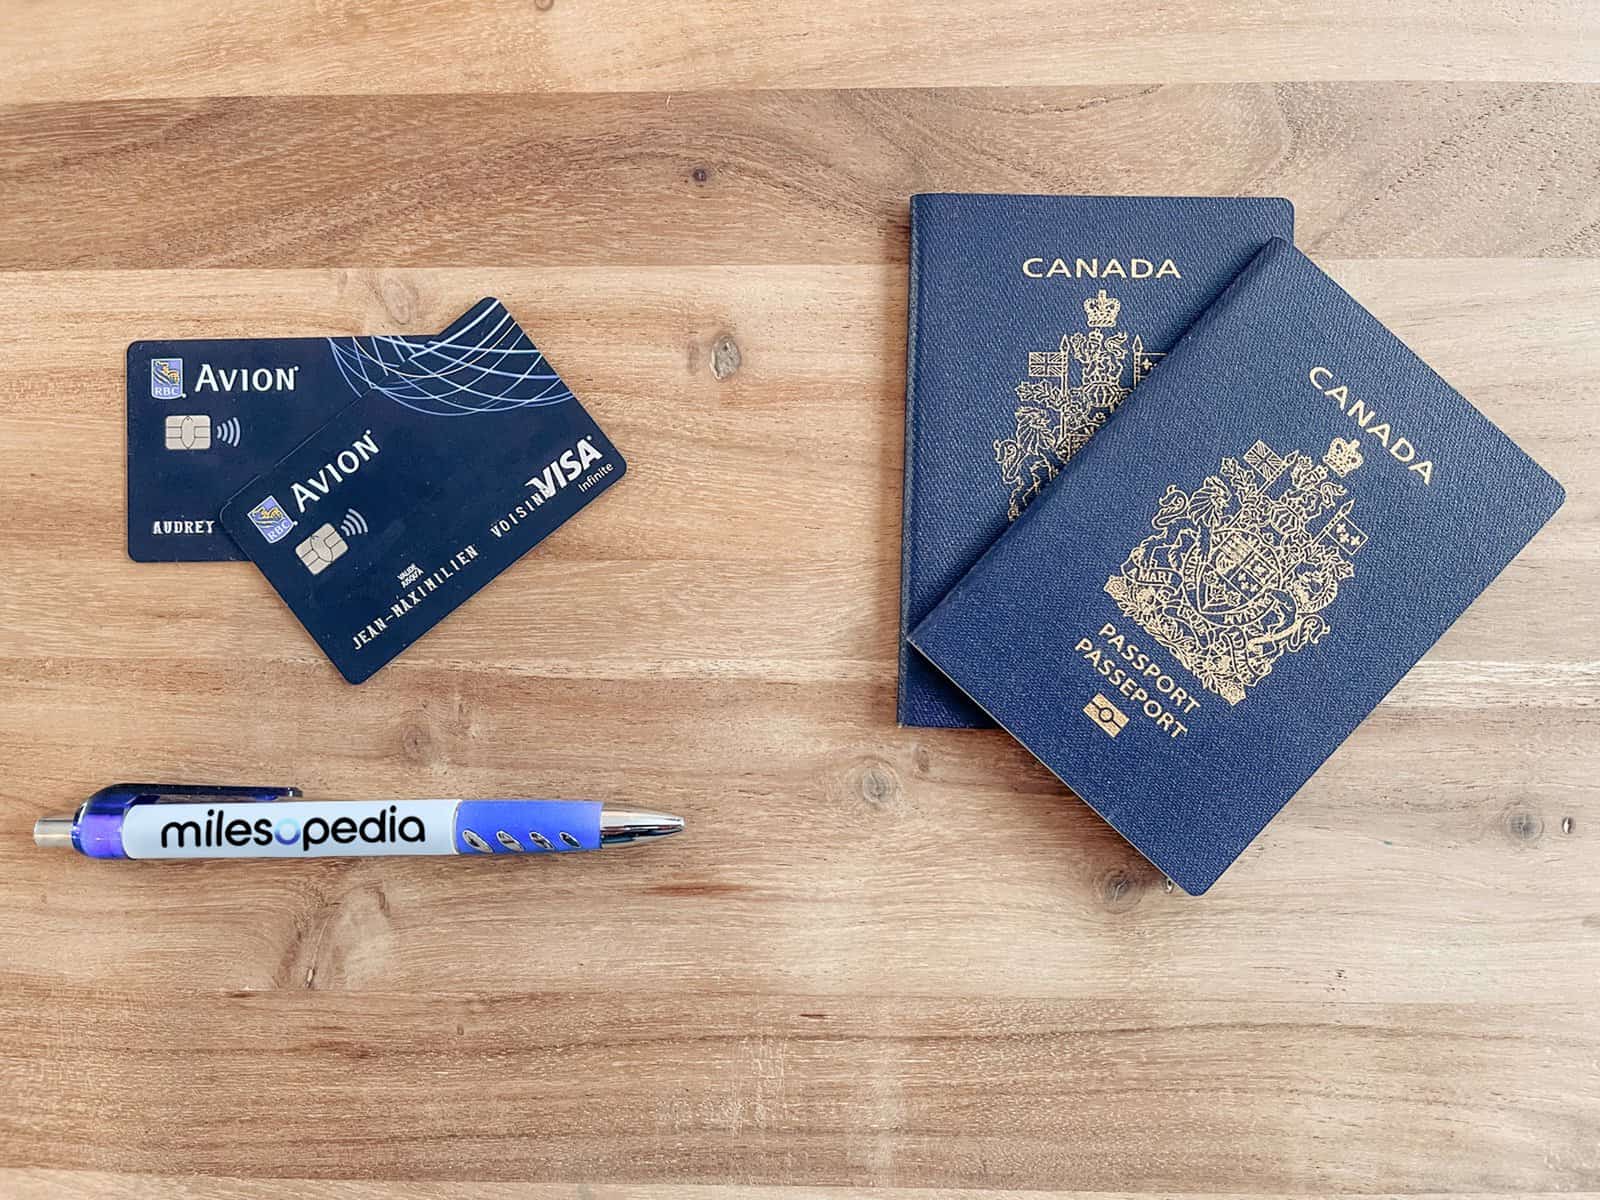 RBC Avion Visa Infinite passport image